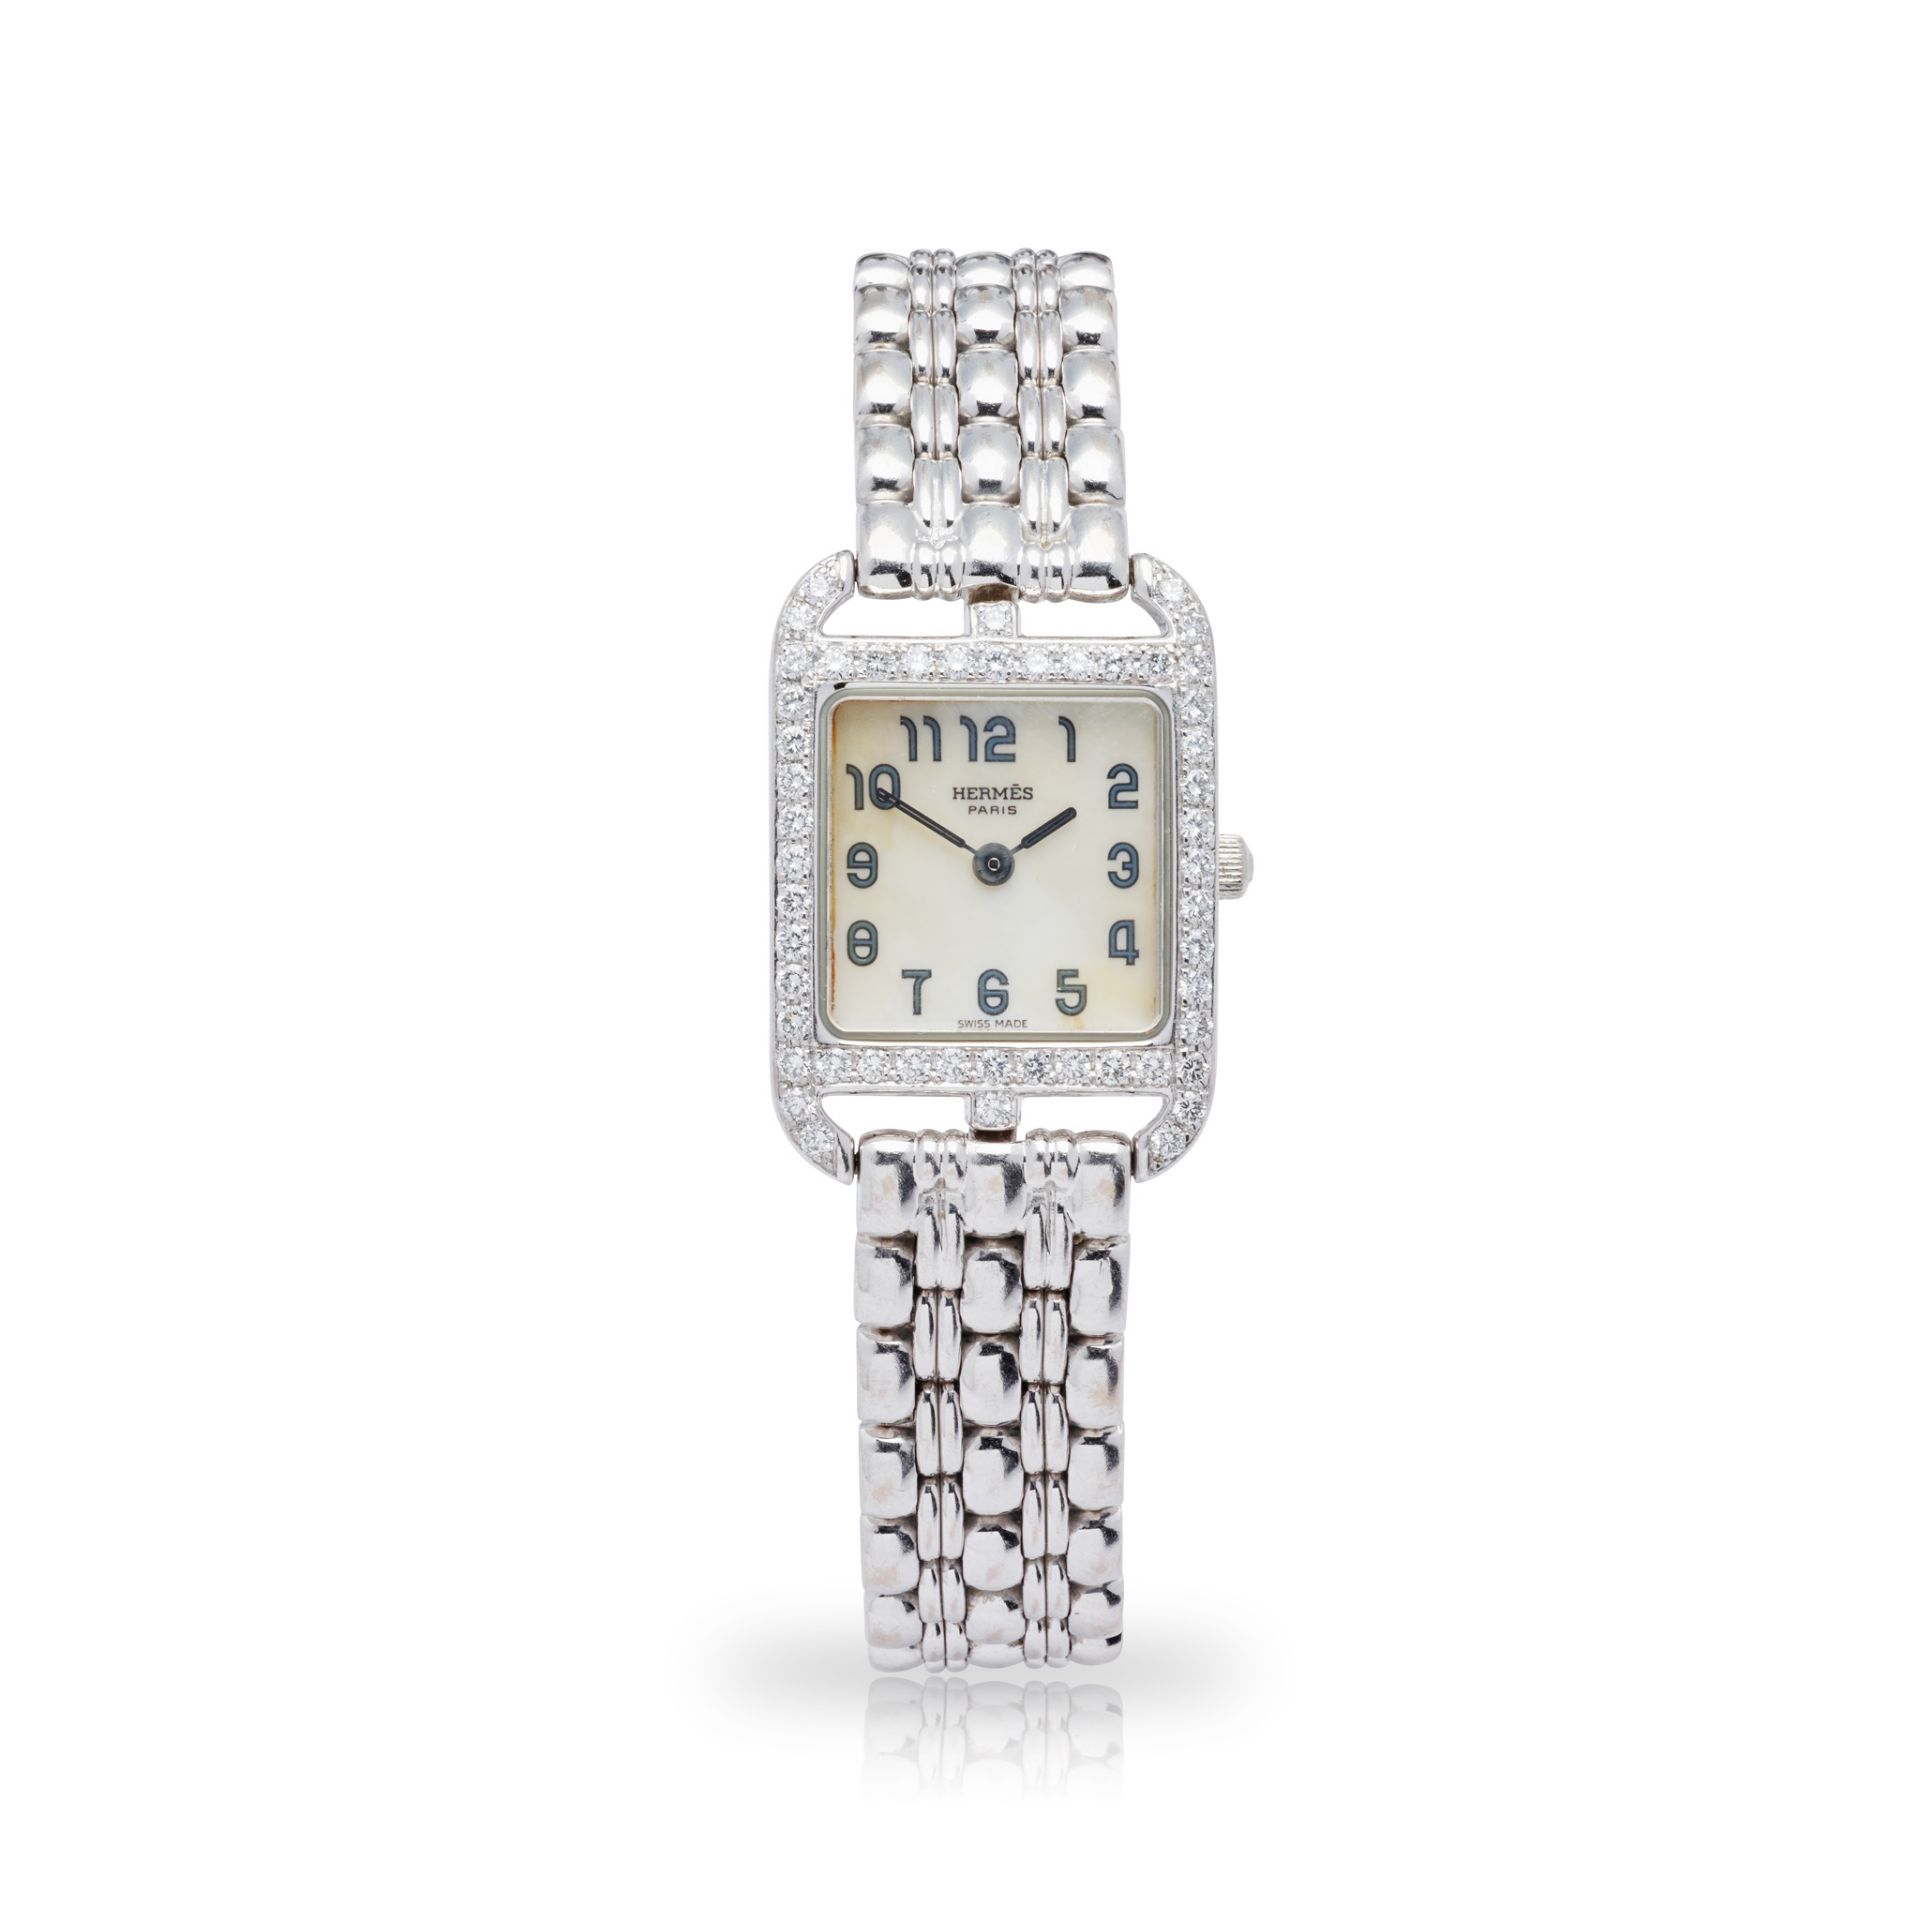 Hermes: a diamond-set watch